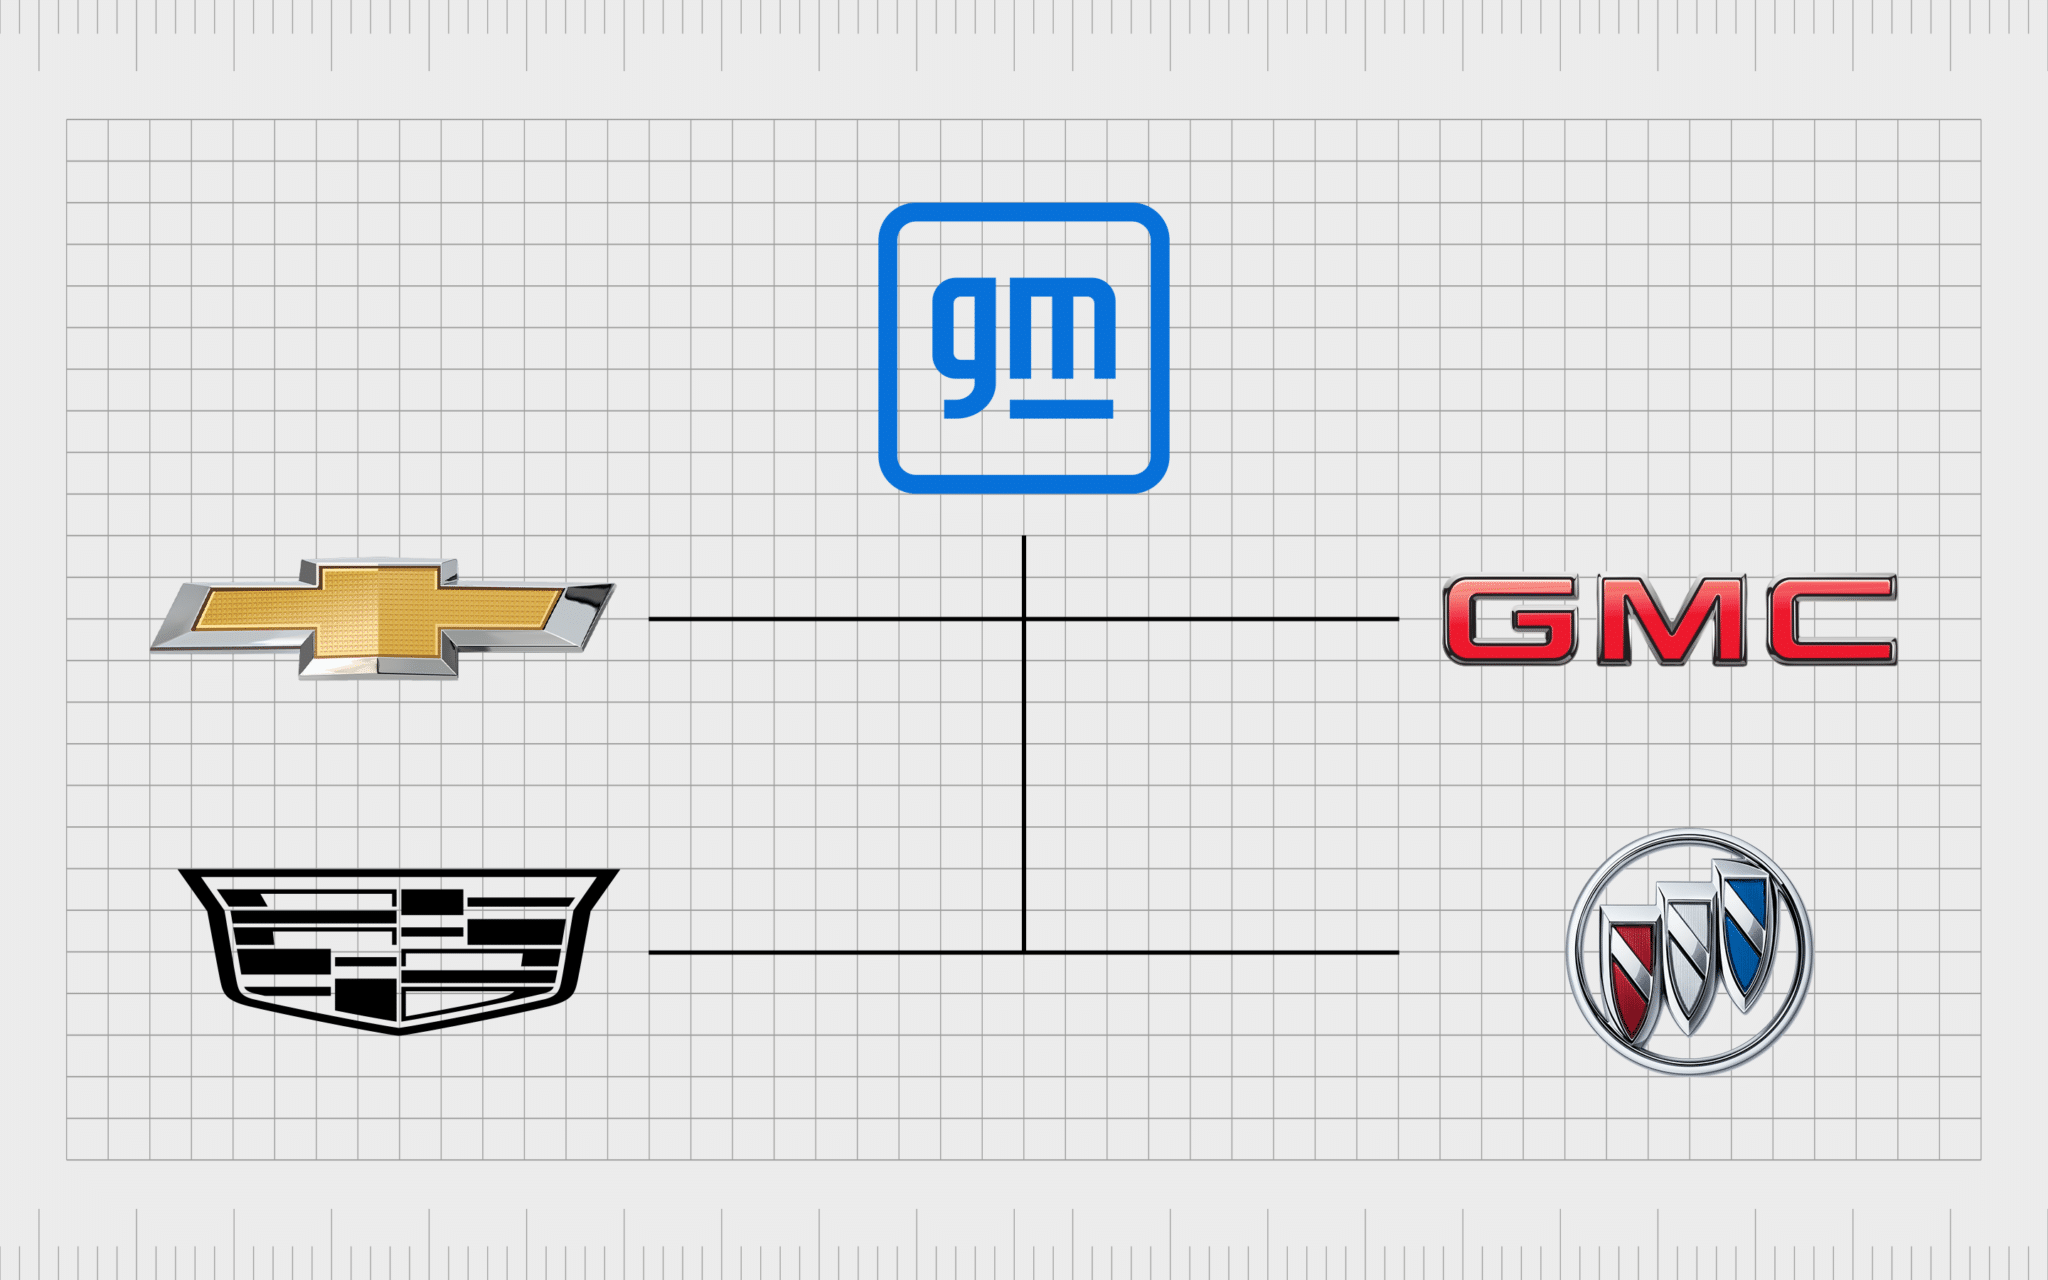 General Motors Group brands